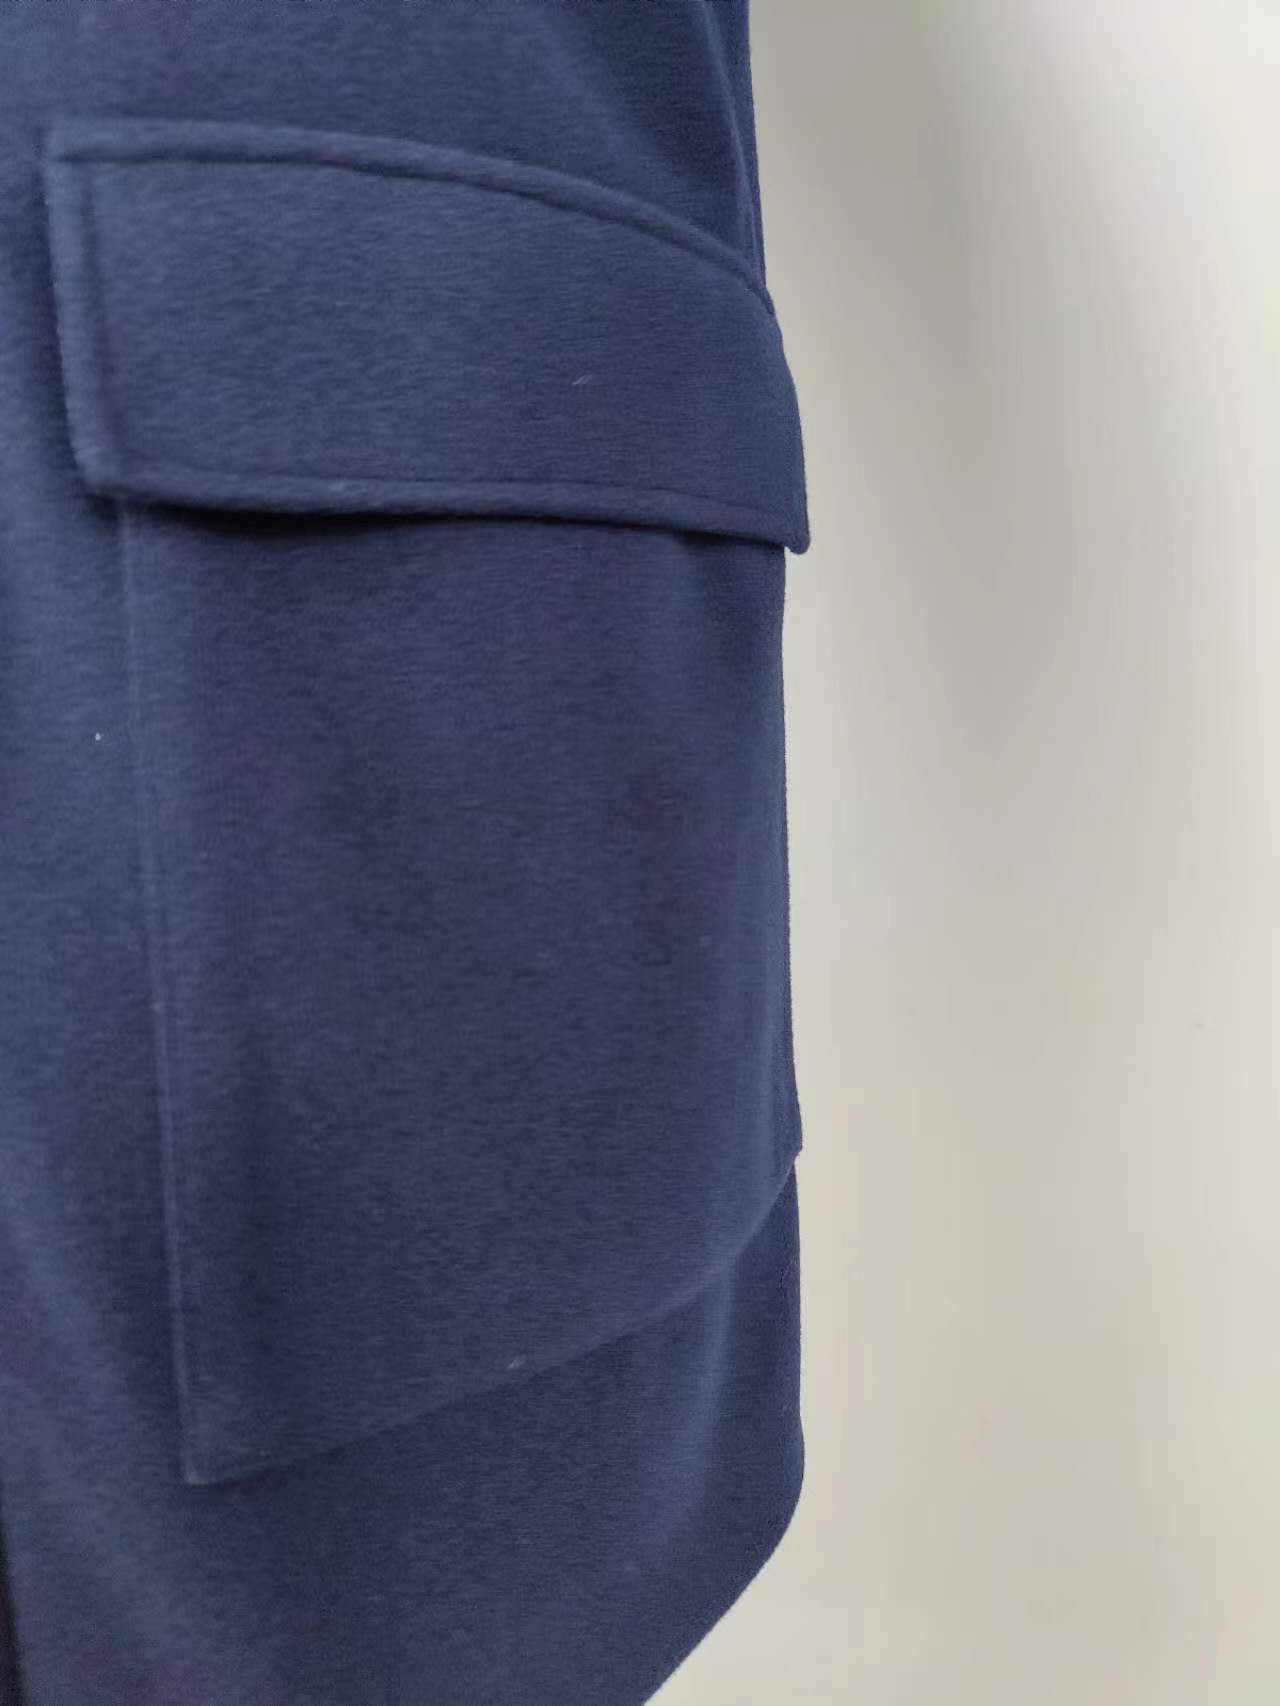 navy blue jacket with big pocket